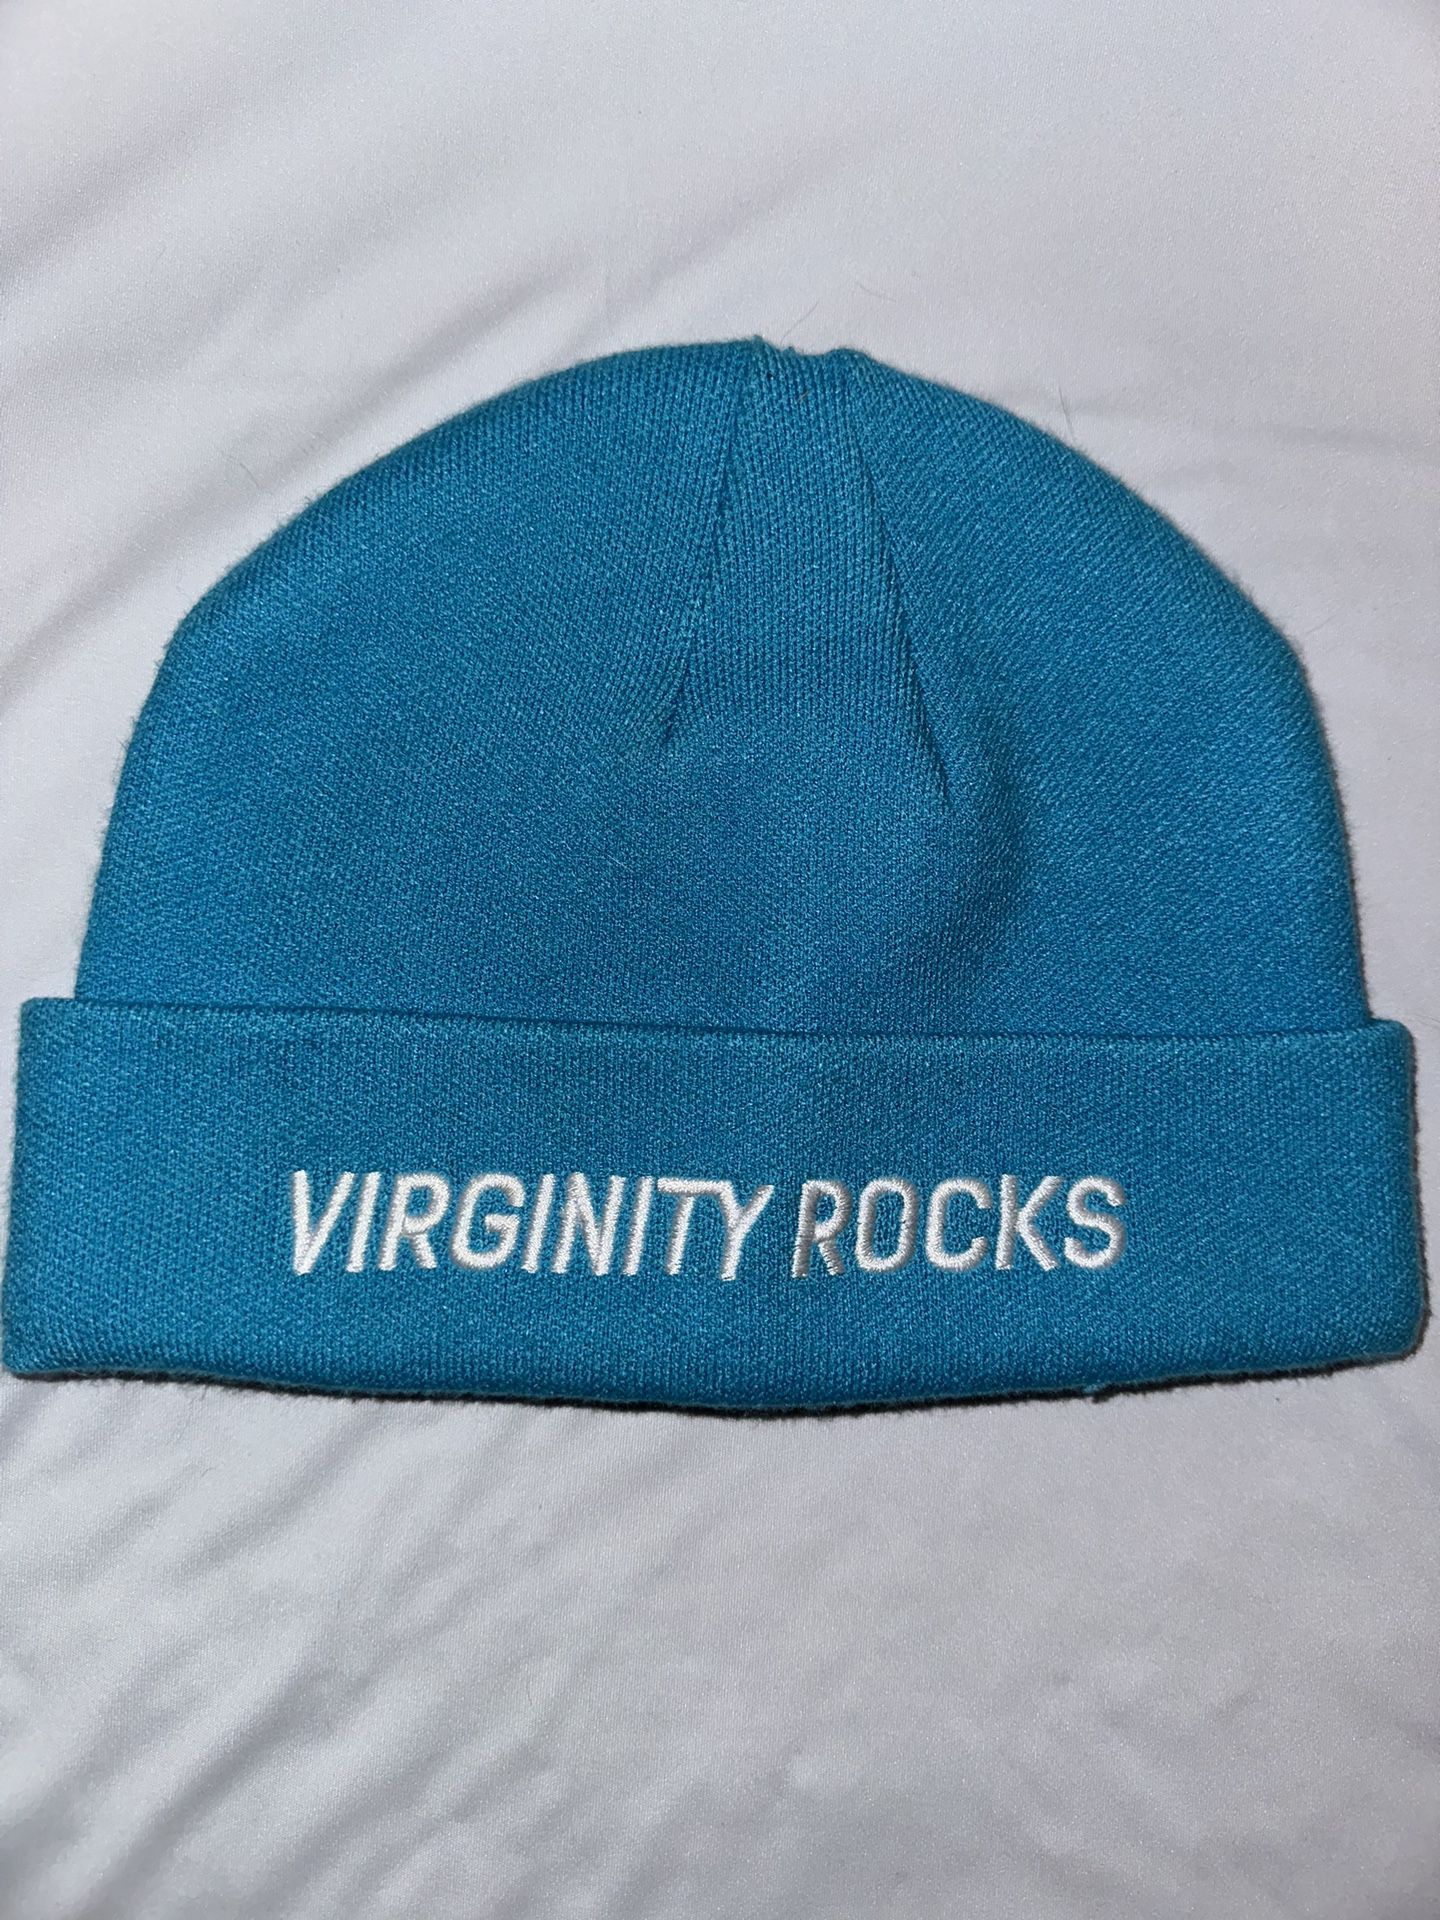 Virginity Rocks Beanie